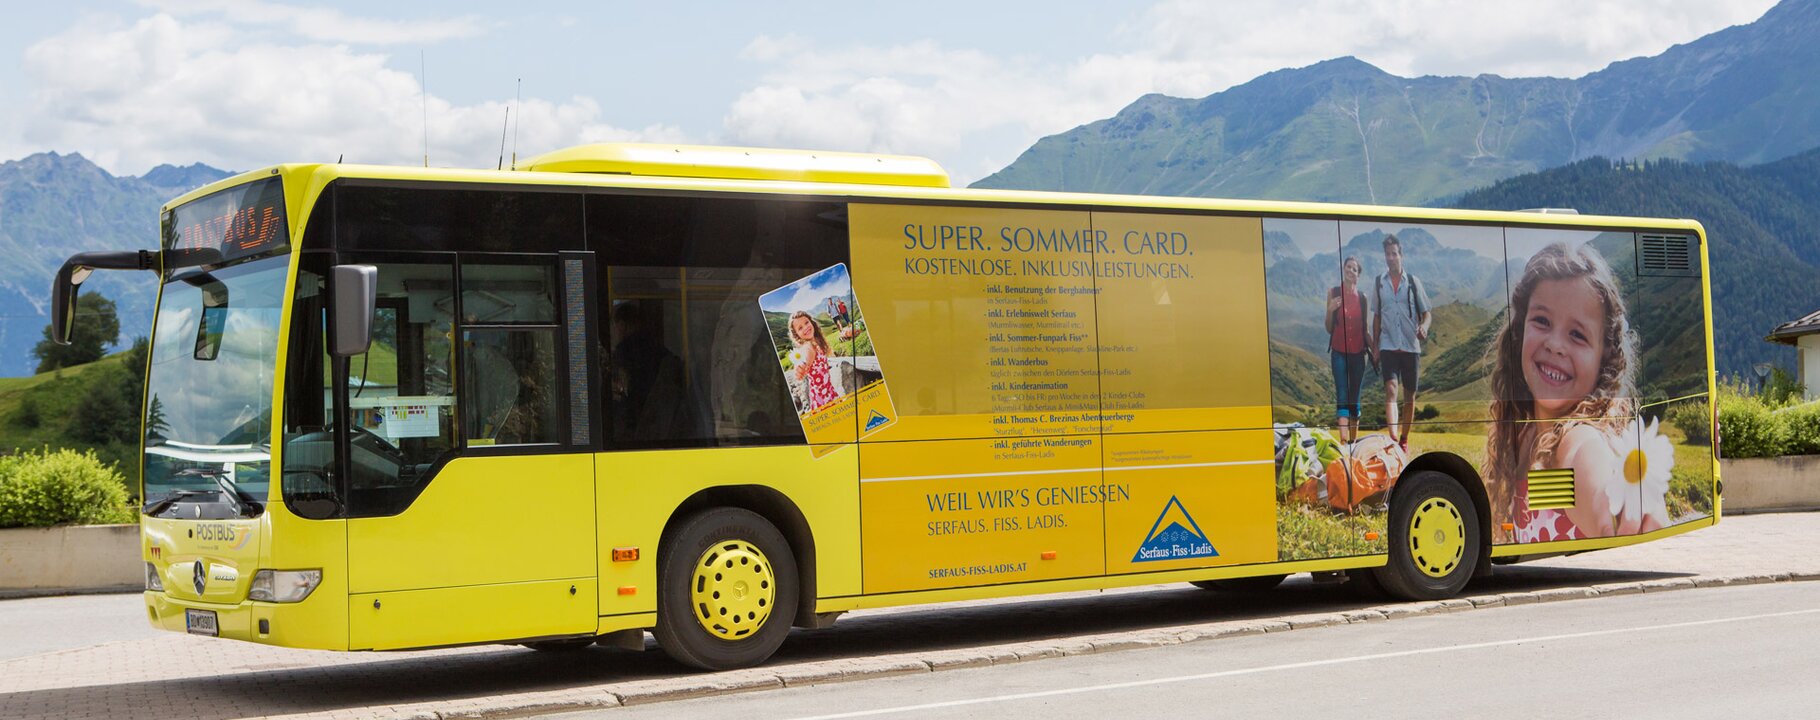 Der Wanderbus in Serfaus-Fiss-Ladis in Tirol | © Andreas Kirschner